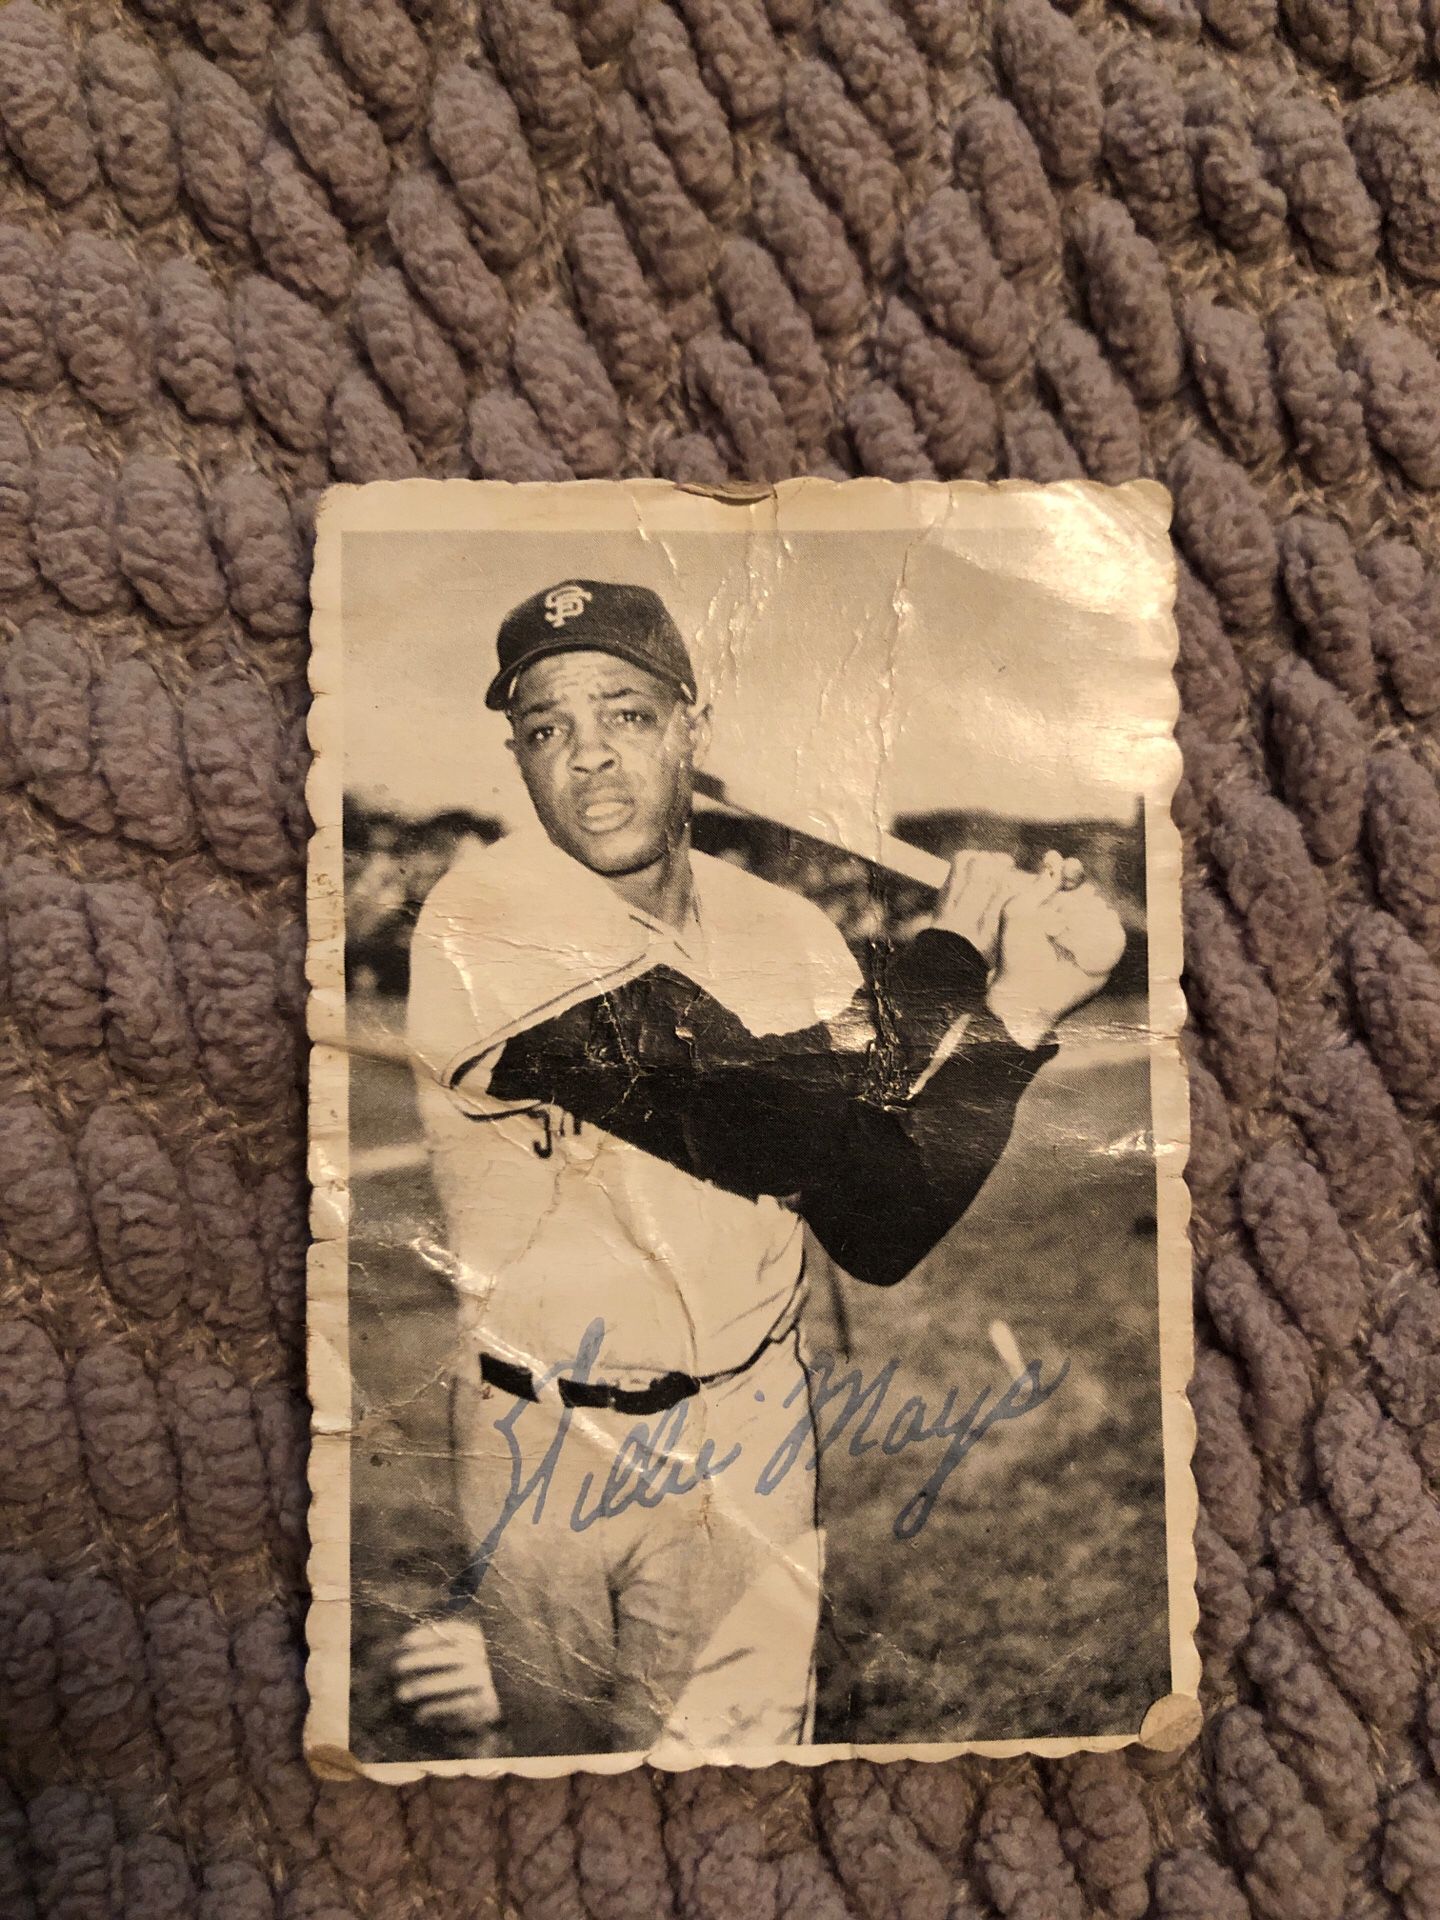 Willie Mays signed baseball card